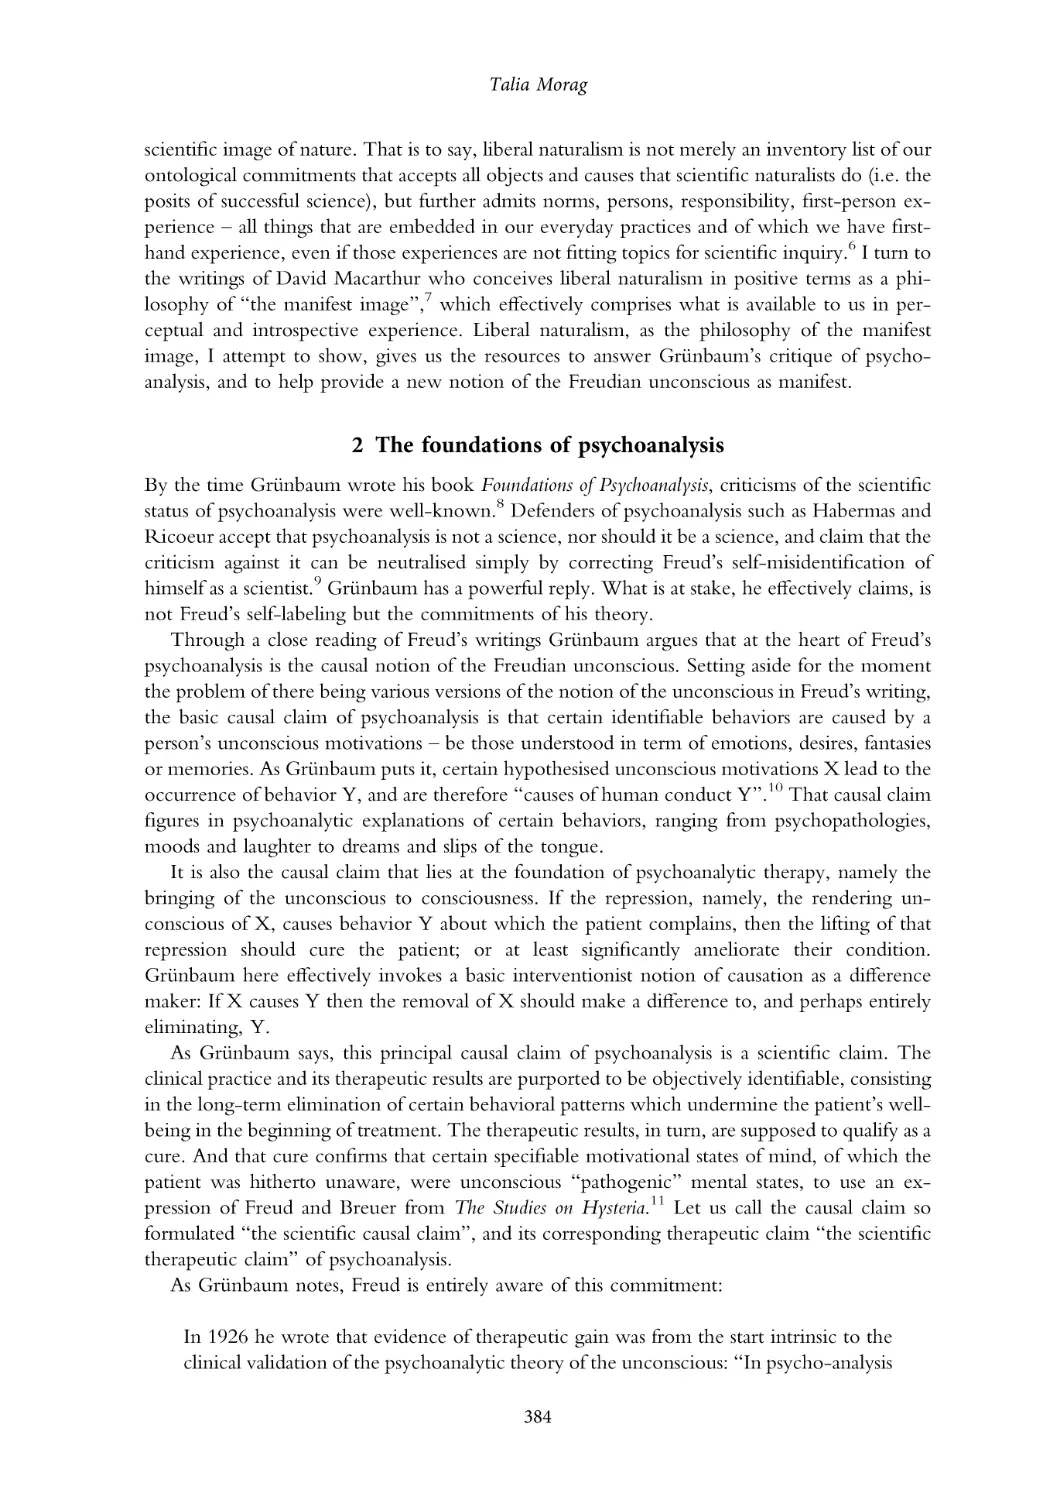 2. The foundations of psychoanalysis